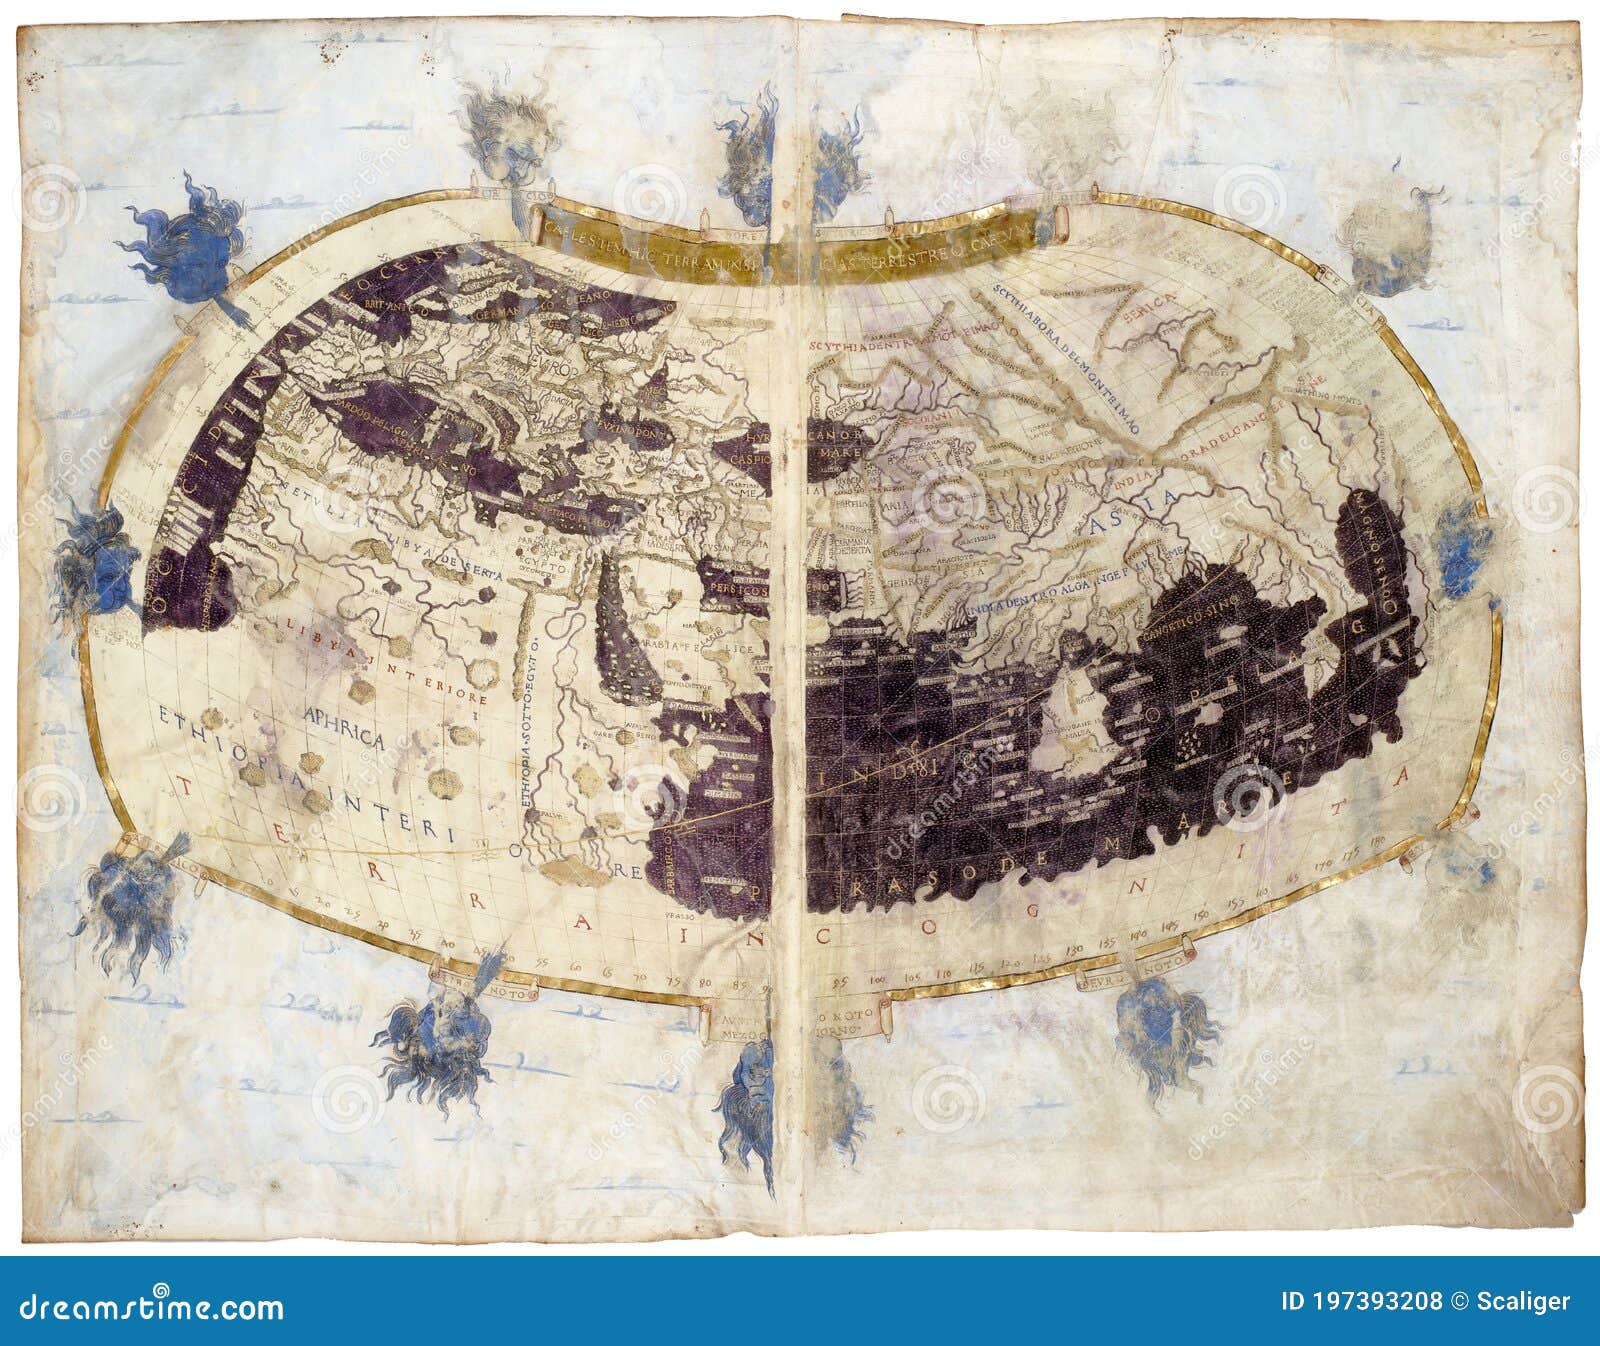 Istoria topografiei: importanta lui Ptolemeu